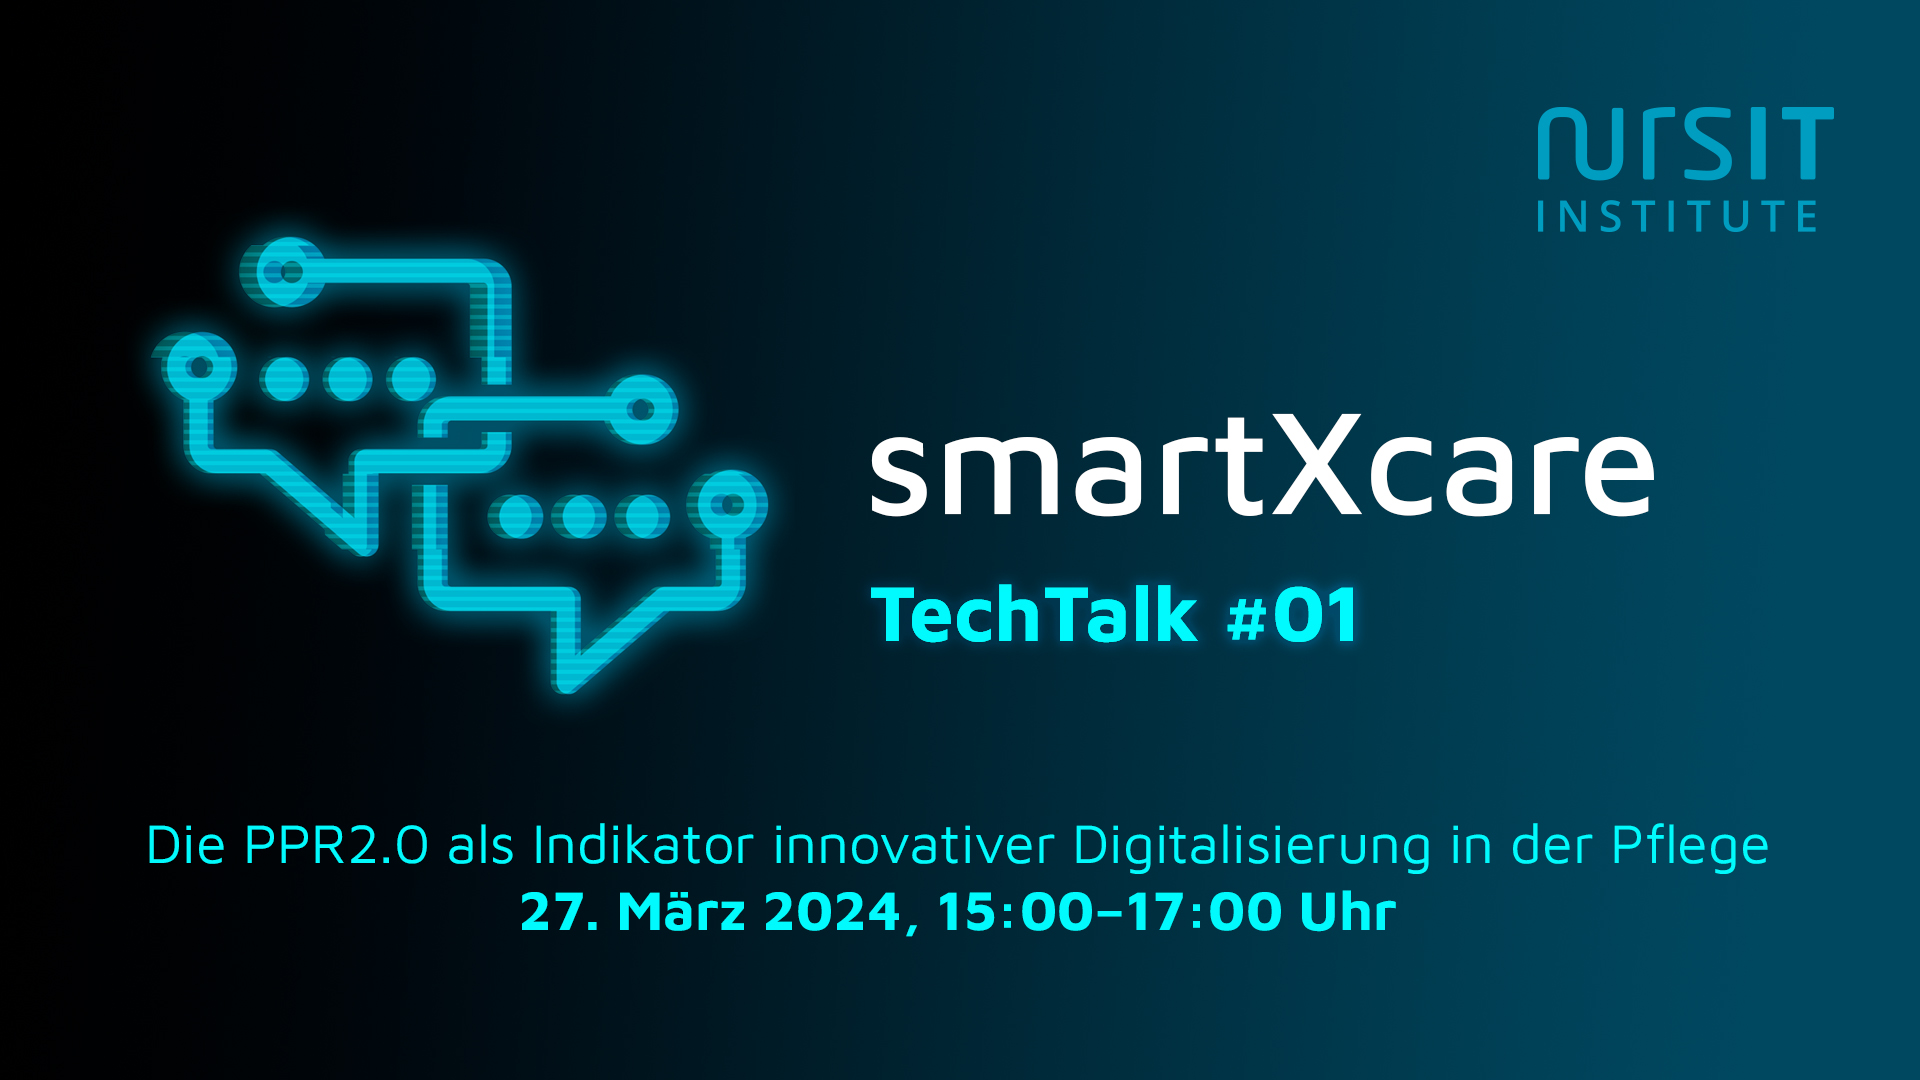 PPR2.0 - smartXcare TechTalk #01